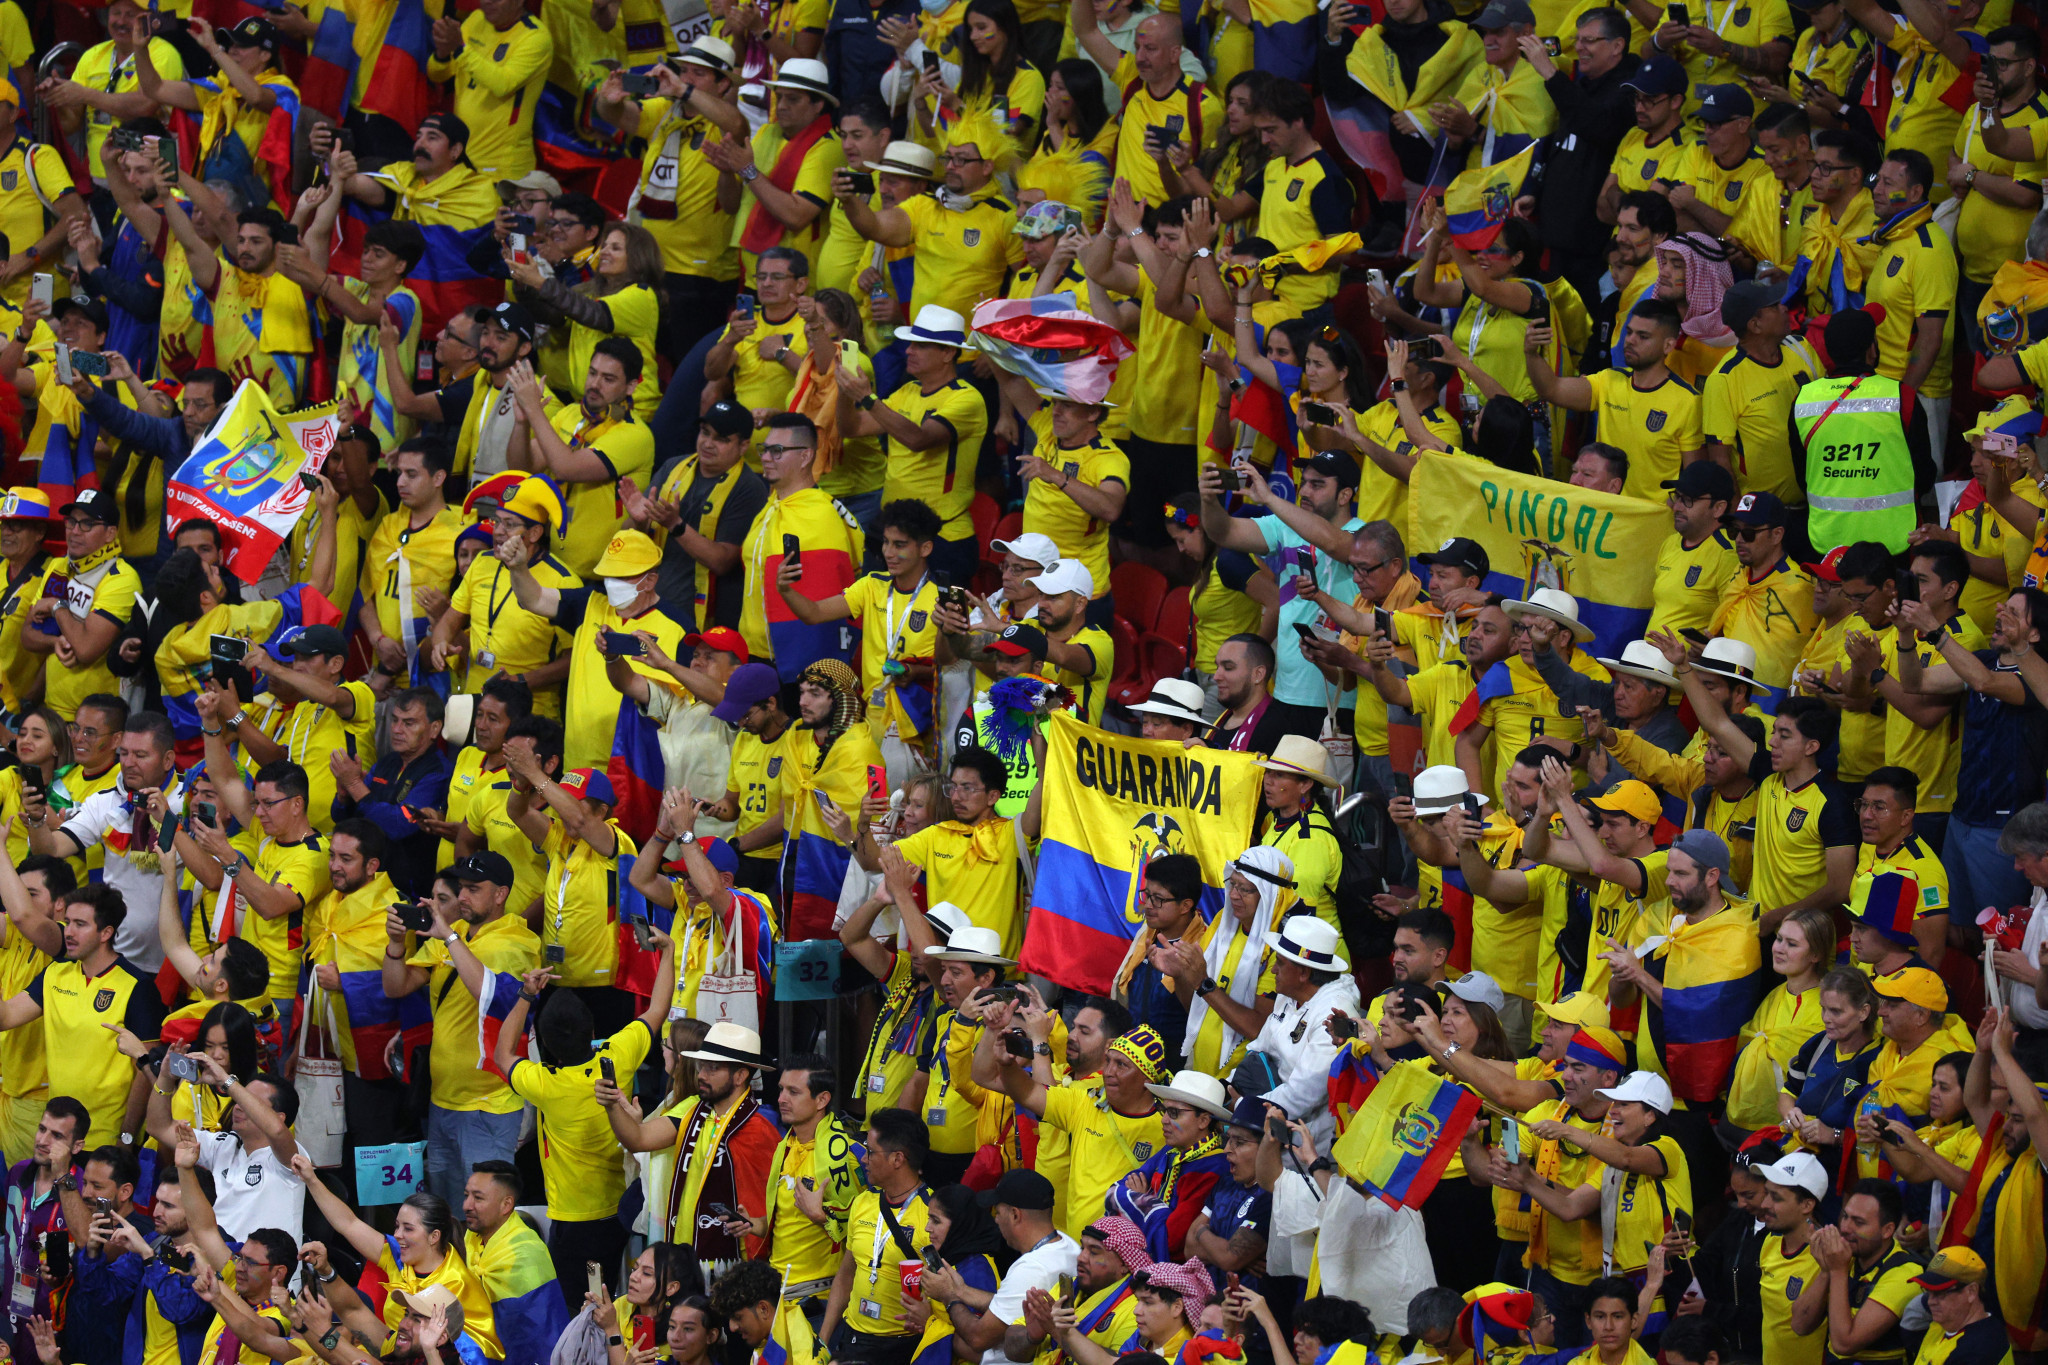 FIFA launches disciplinary investigation into Ecuador fans over homophobic chants